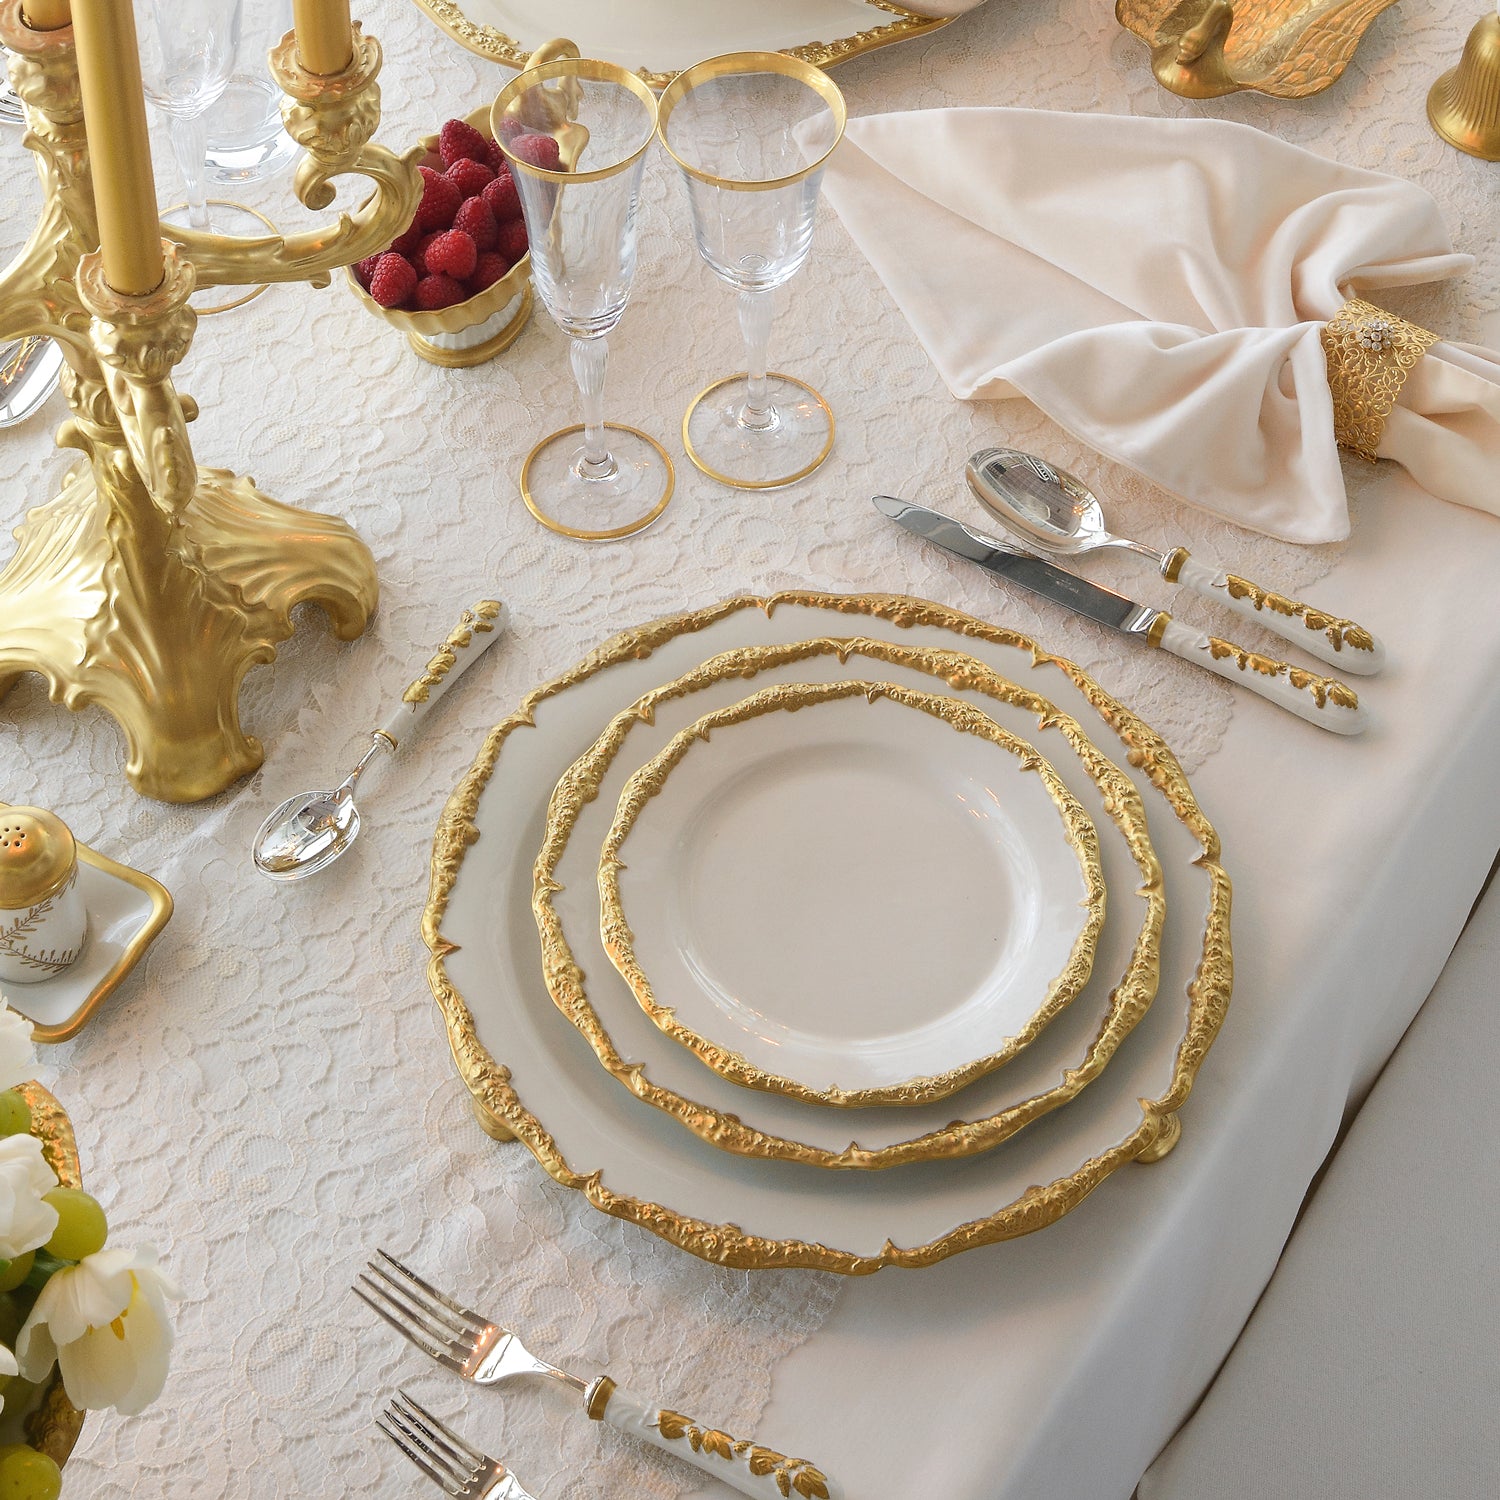 Empire Dining Set - White & Gold